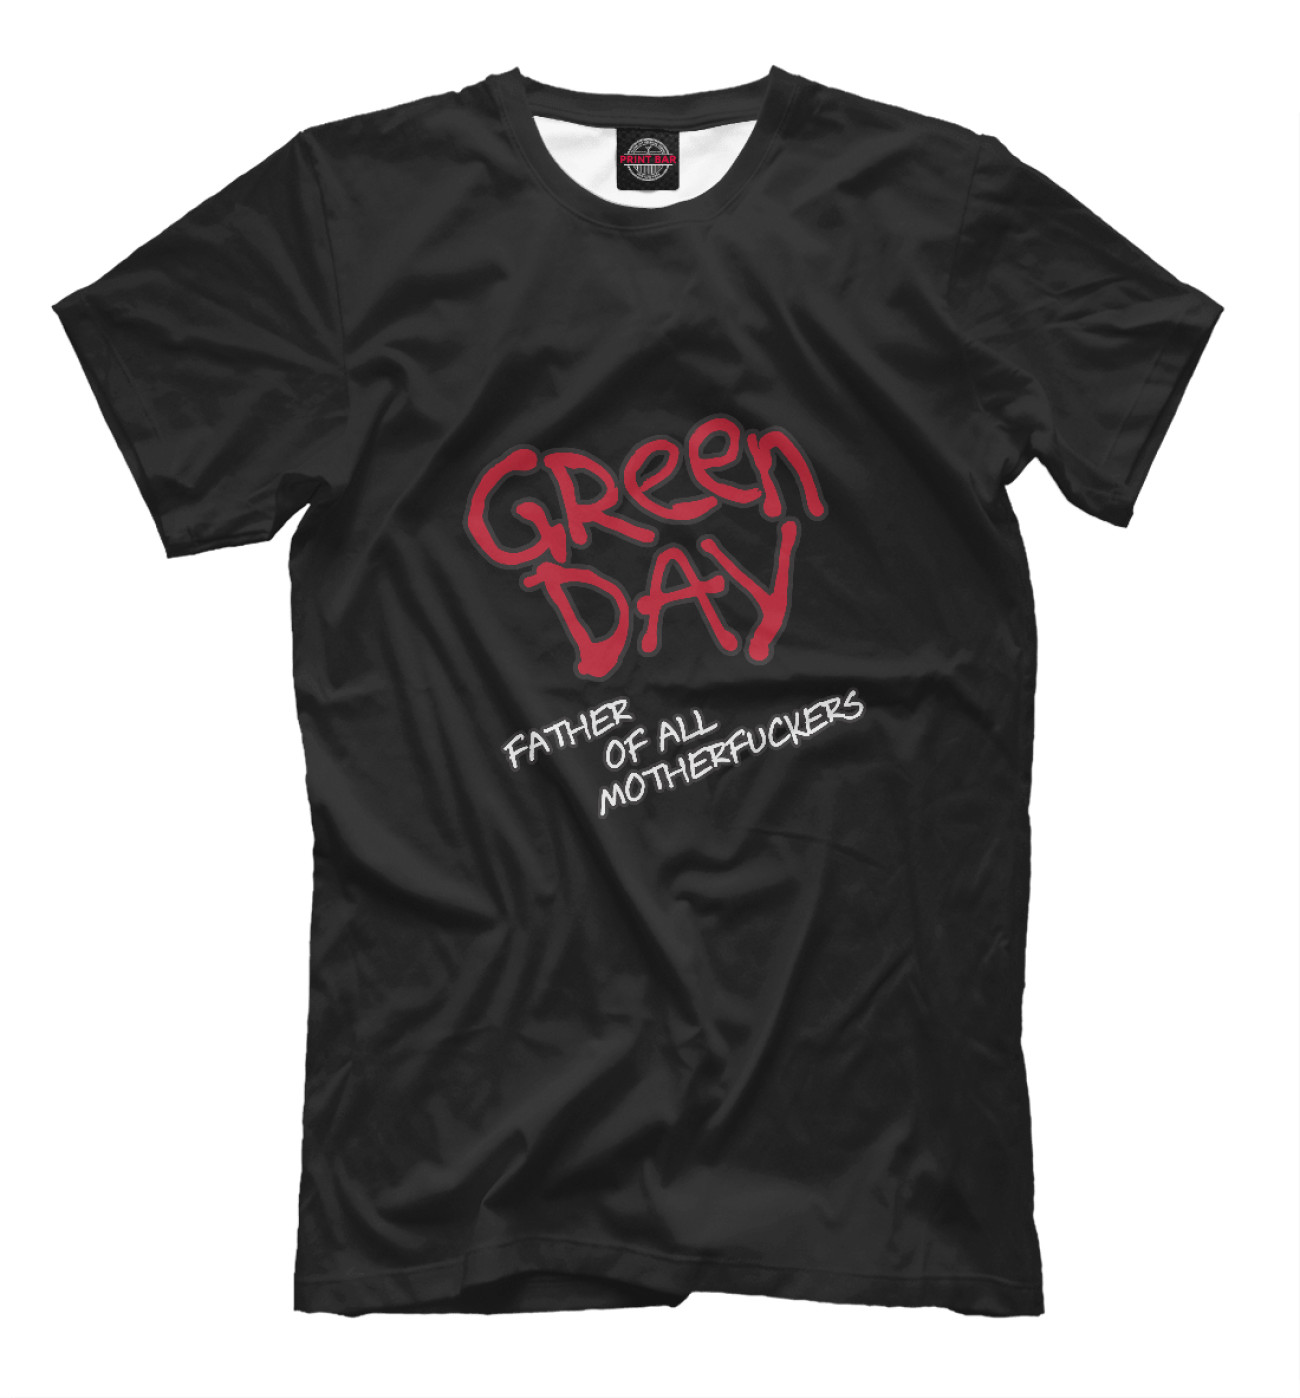 Мужская Футболка Green Day Unicorn, артикул: GRE-155589-fut-2